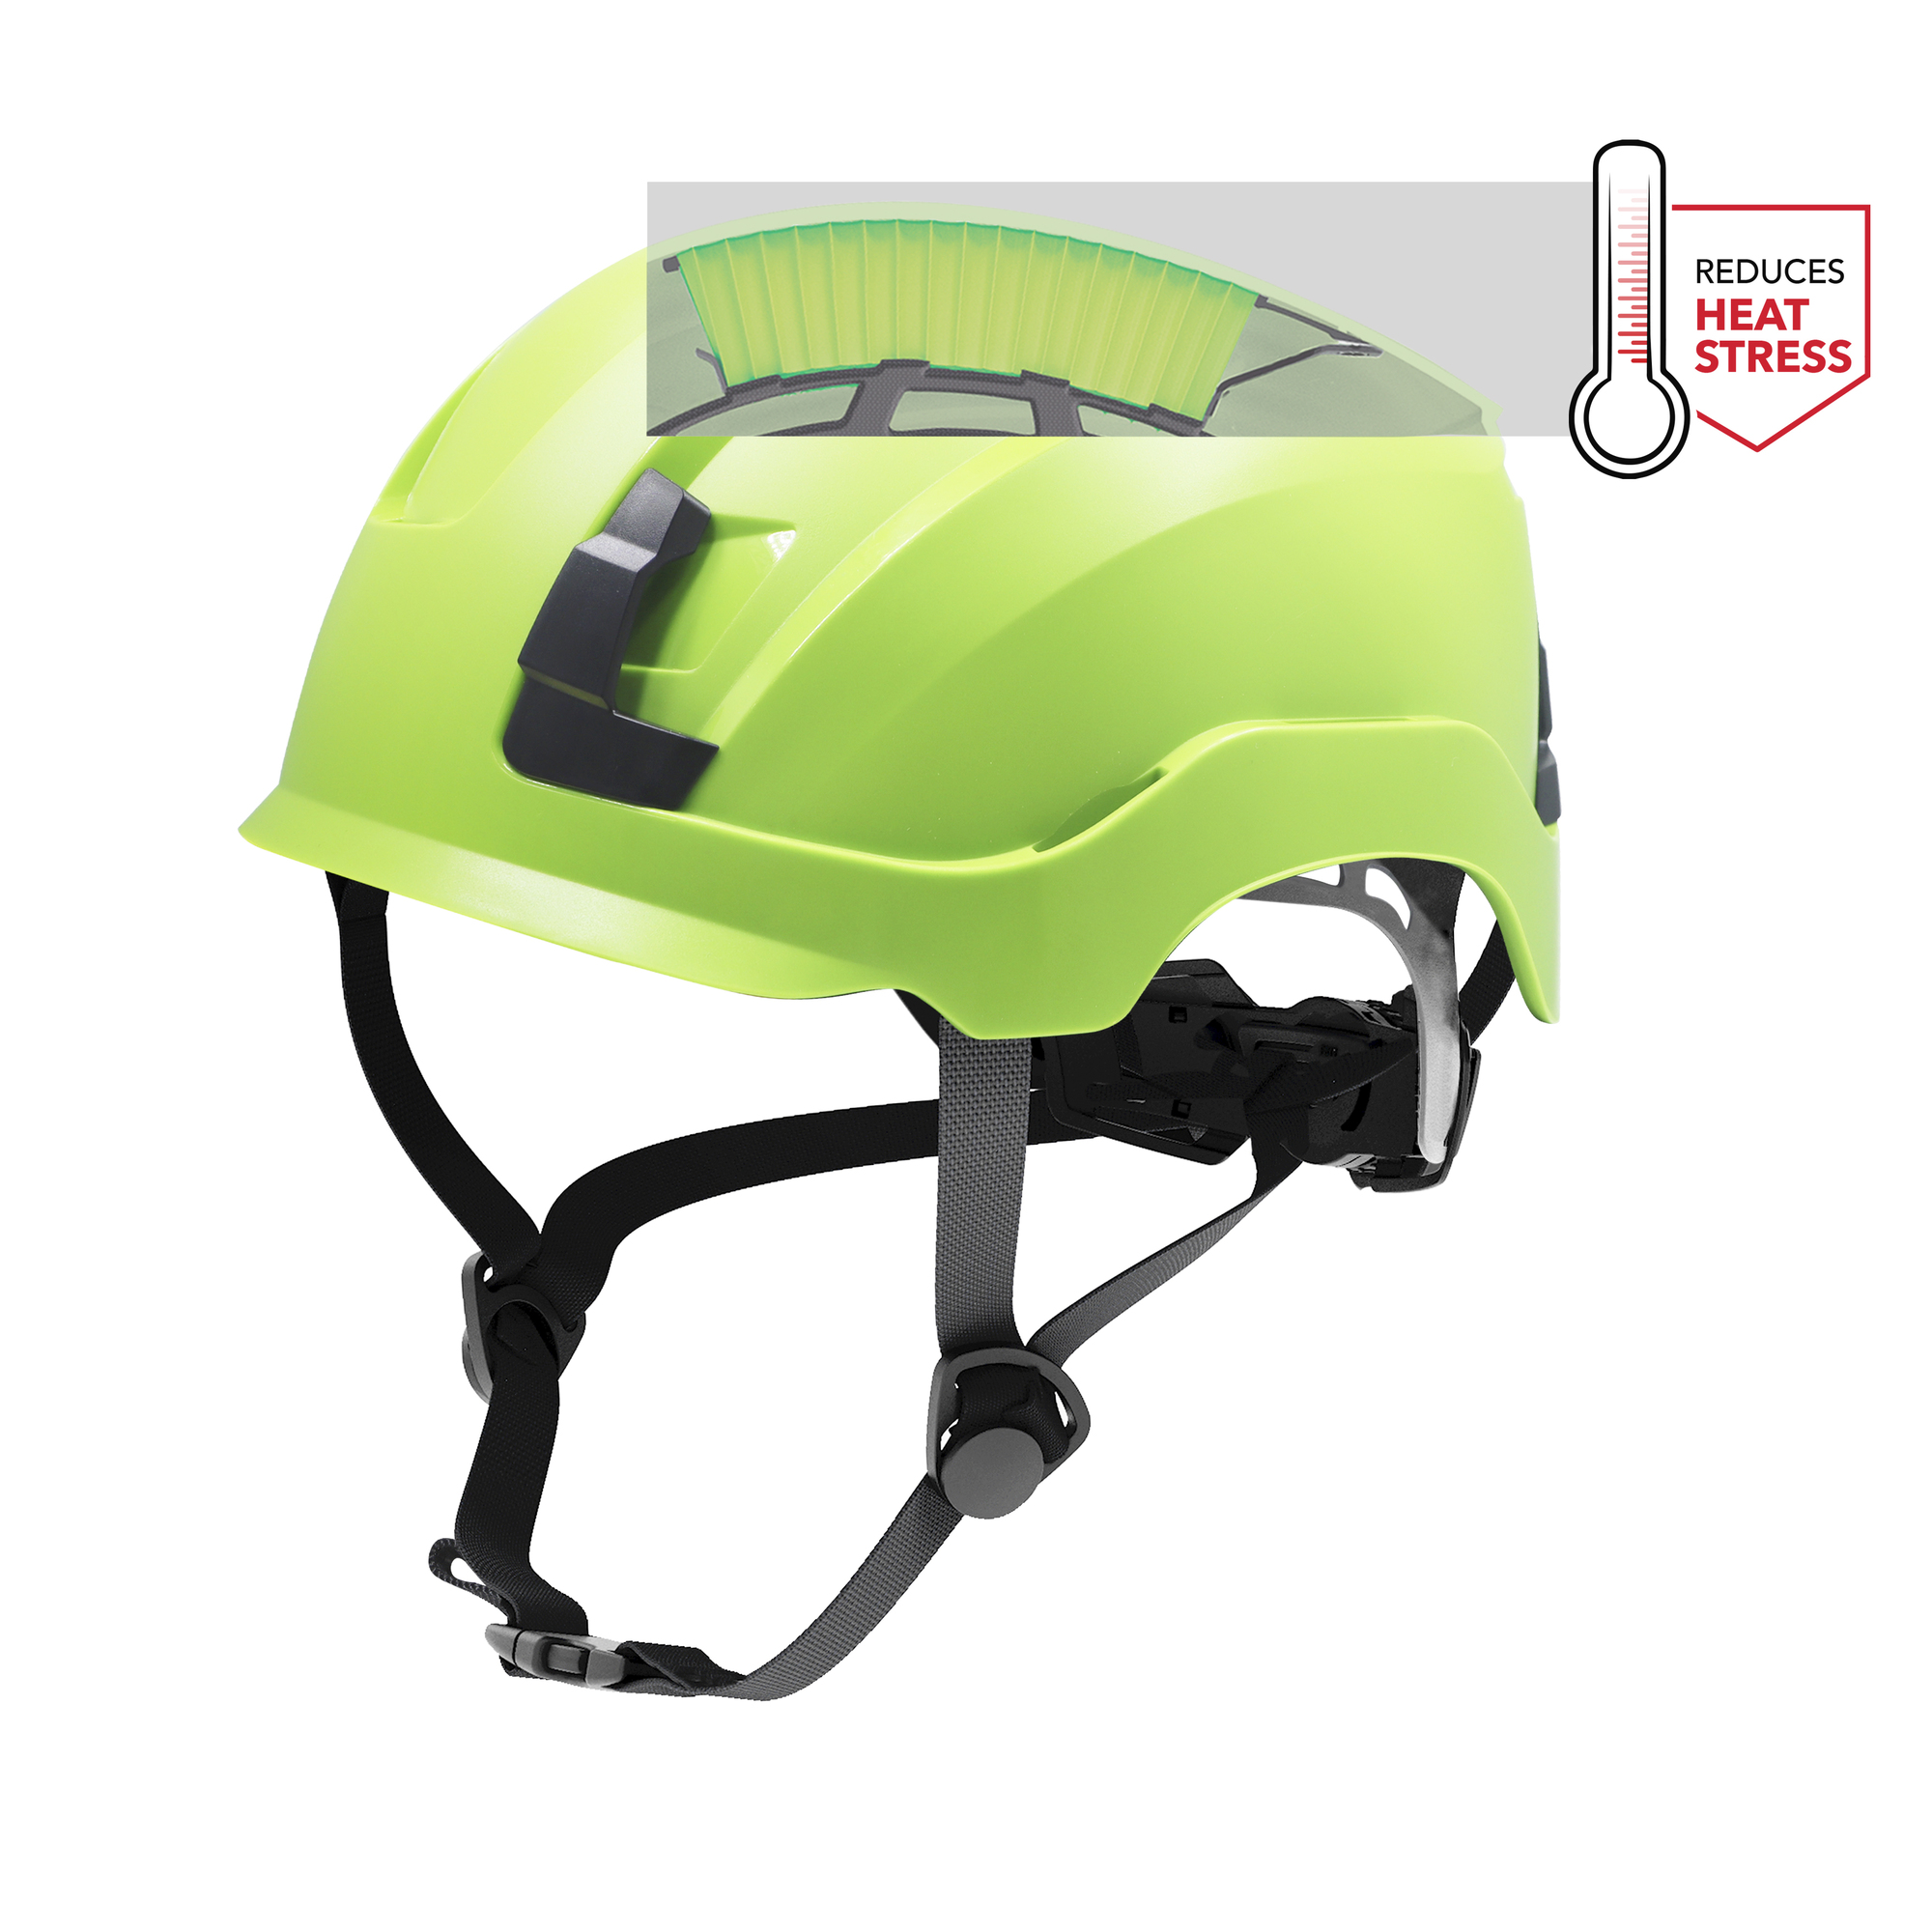 General Electric, Low-Profile Green GH400 Safety Helmet Vented, Hard Hat Style Helmet, Hat Size Adjustable, Color Green, Model GH400GN